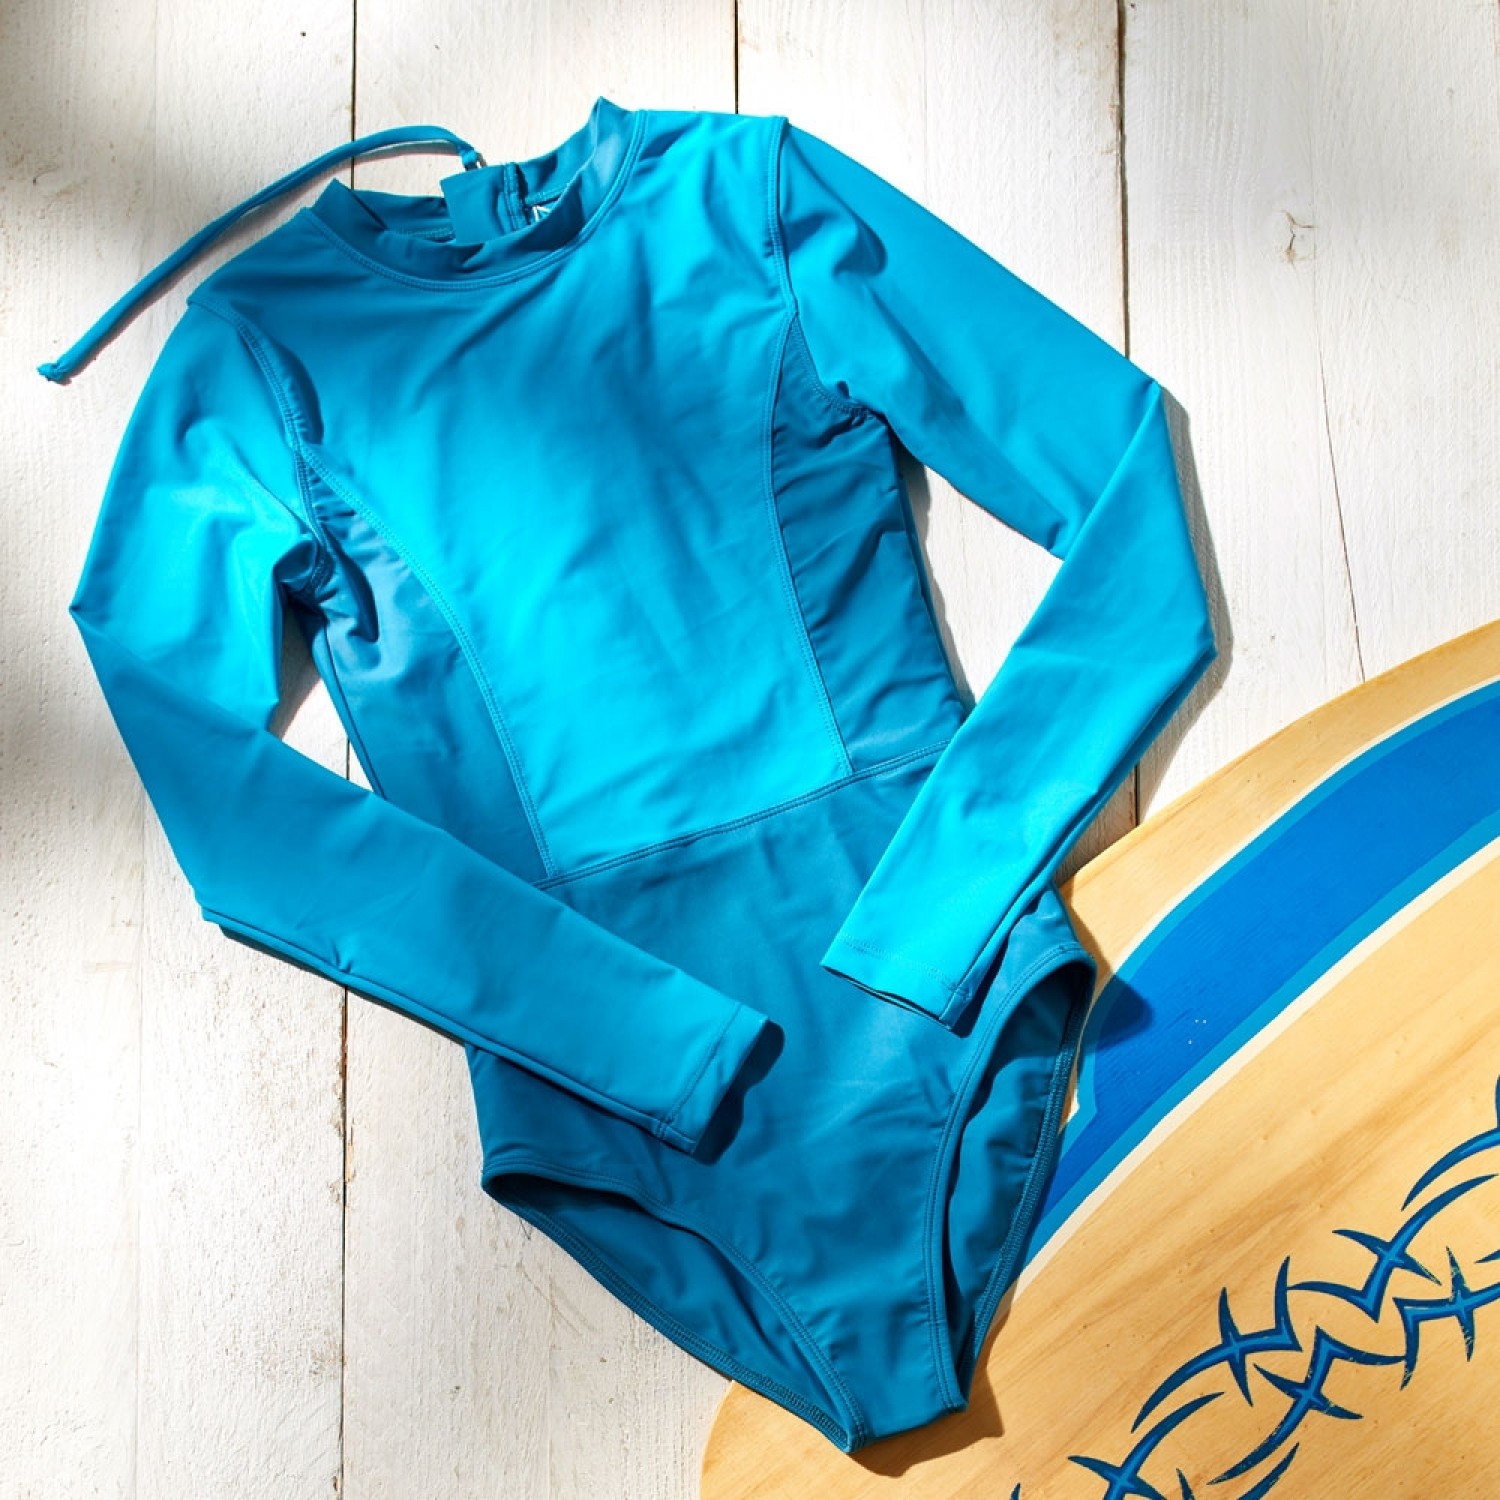 Earlyfish Rash Guard Long Sleeve One Piece Swimsuit Zipper Turquoise/Teal